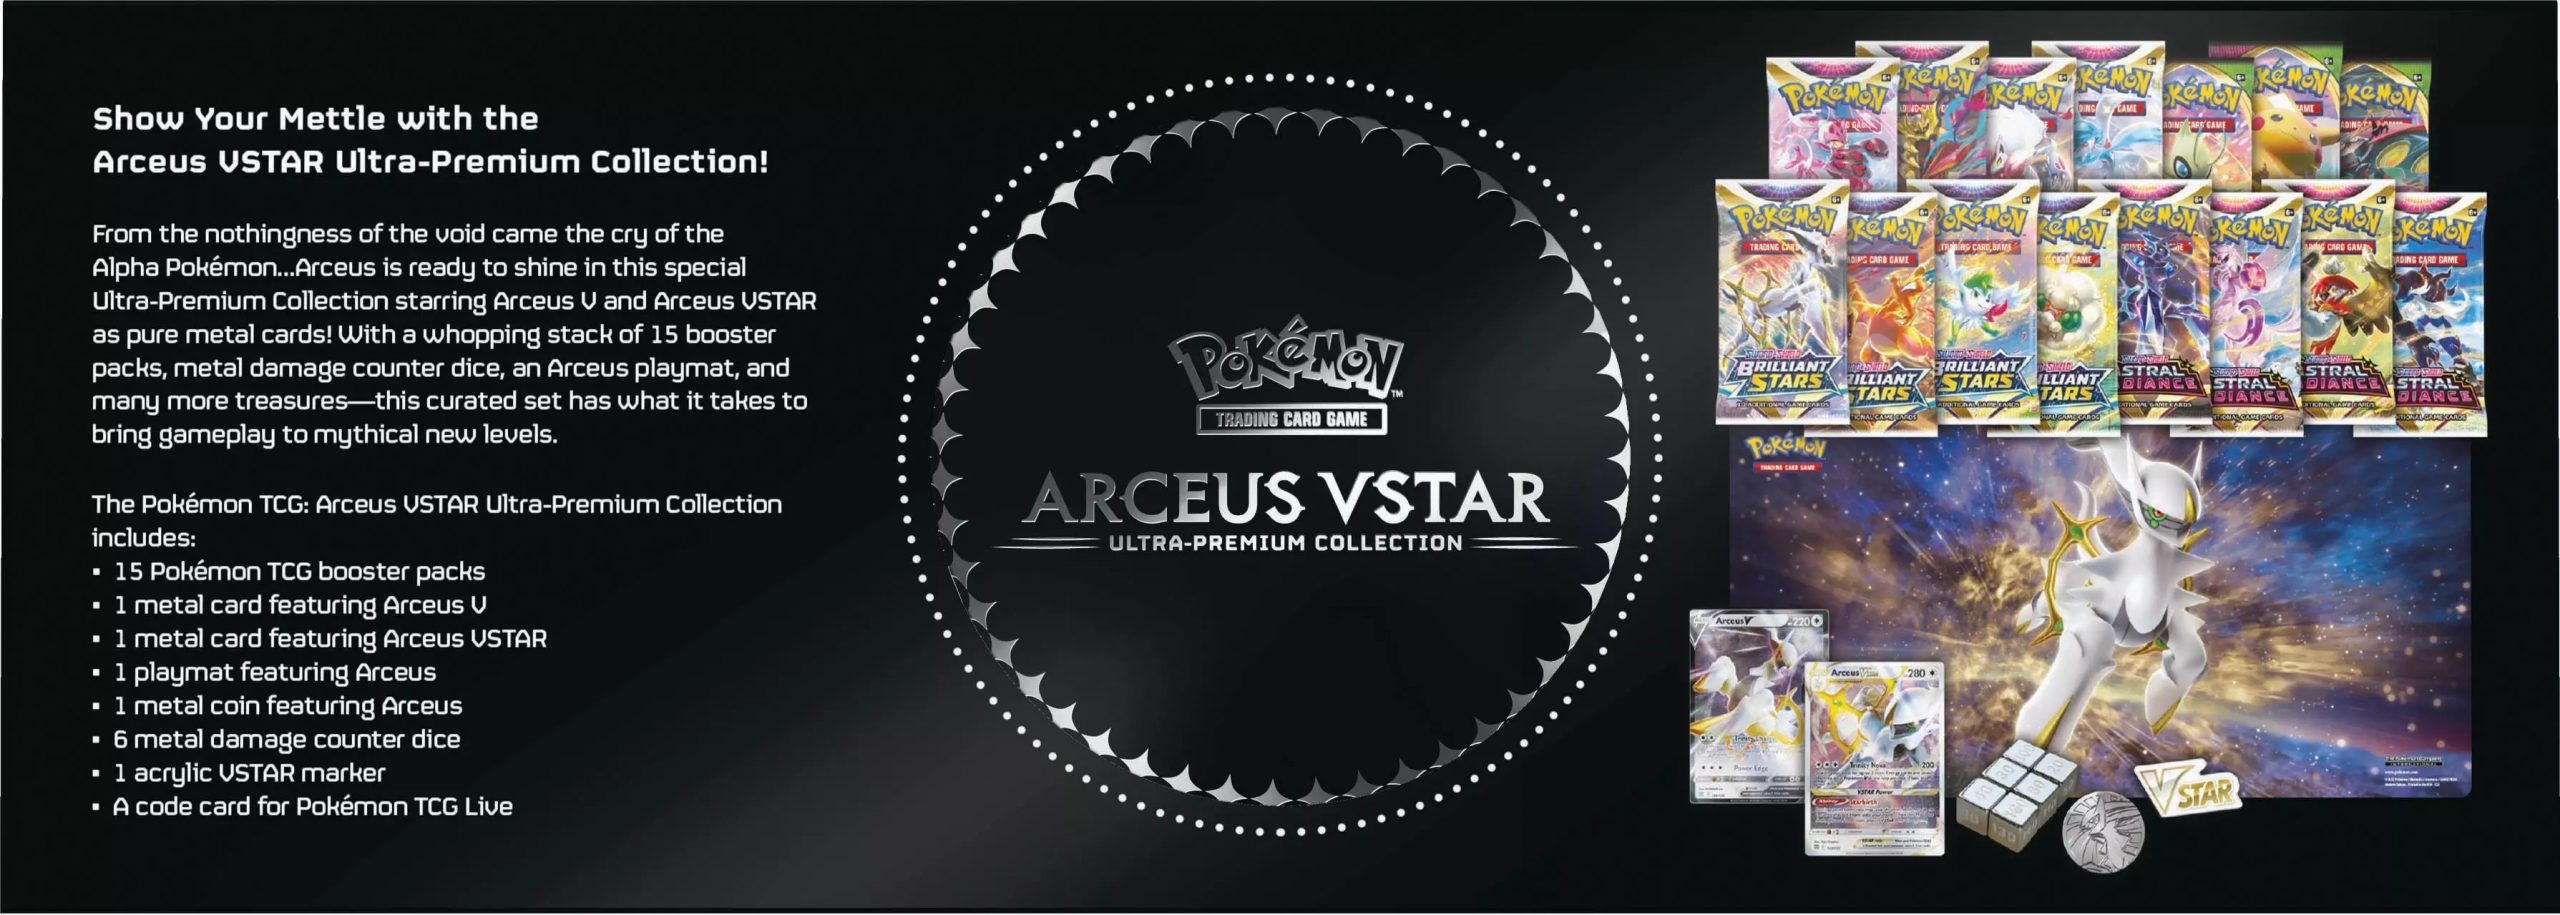 Arceus Vstar Ultra Premium Collection Revealed Exclusive To Gamestop Pokebeach Com Forums